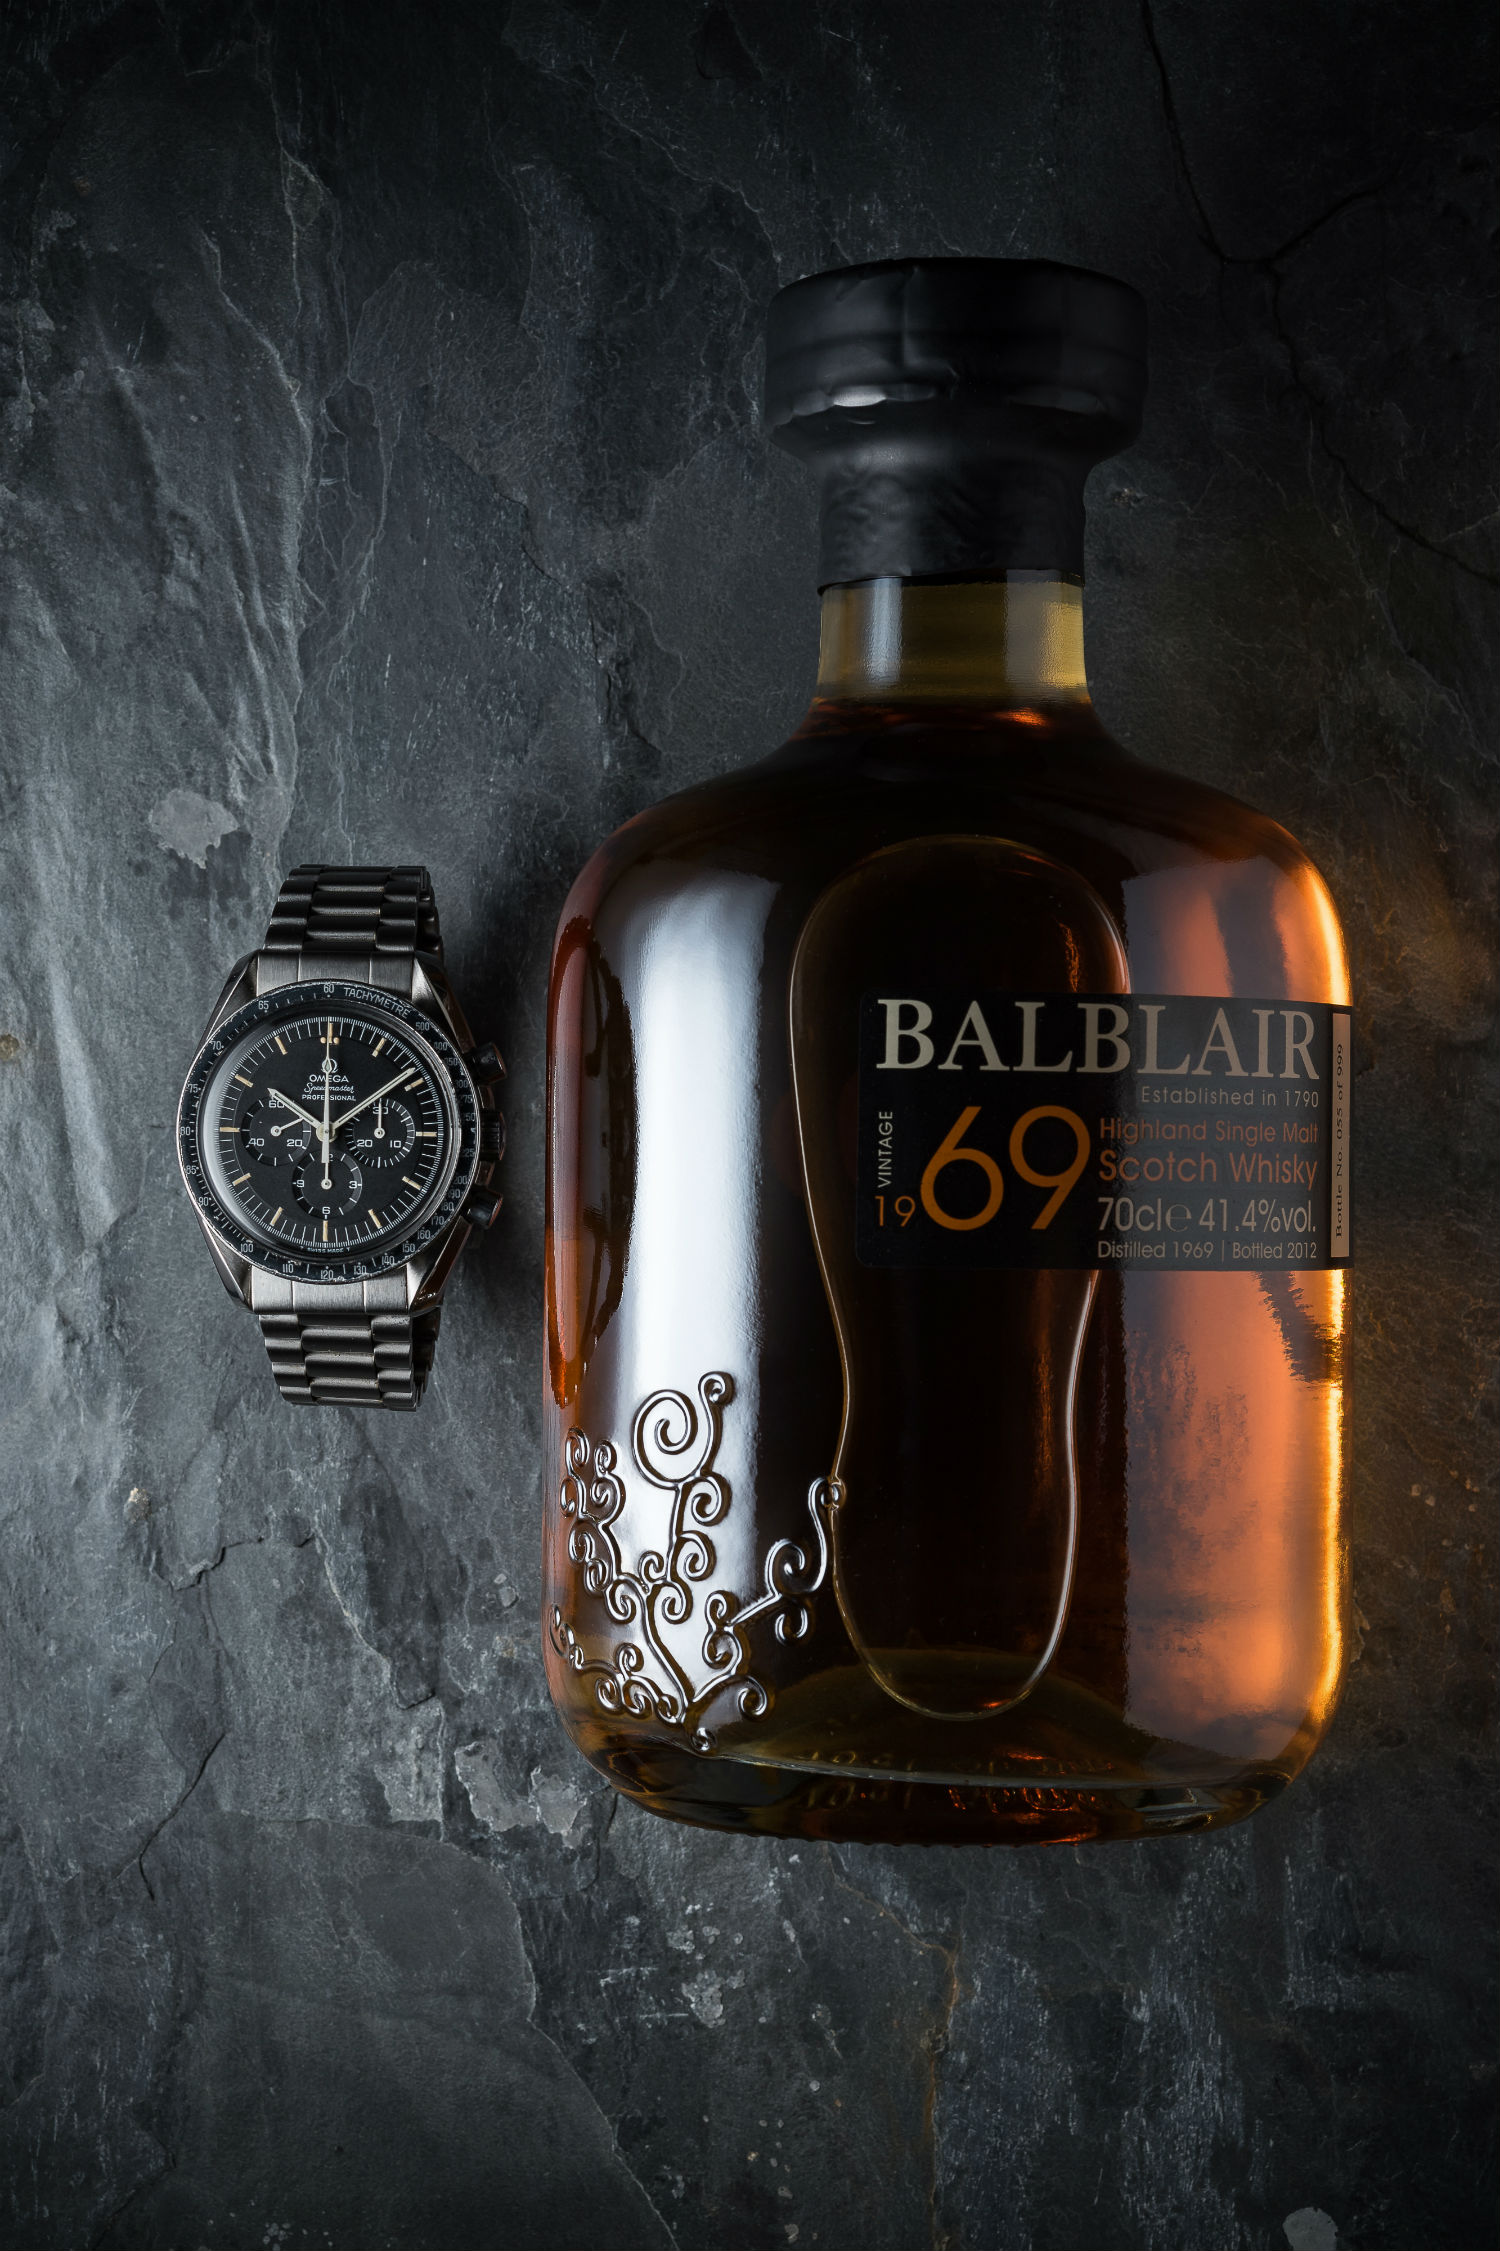 Watches and Whisky: Balblair Vintage 1969 + Omega Speedmaster 1969